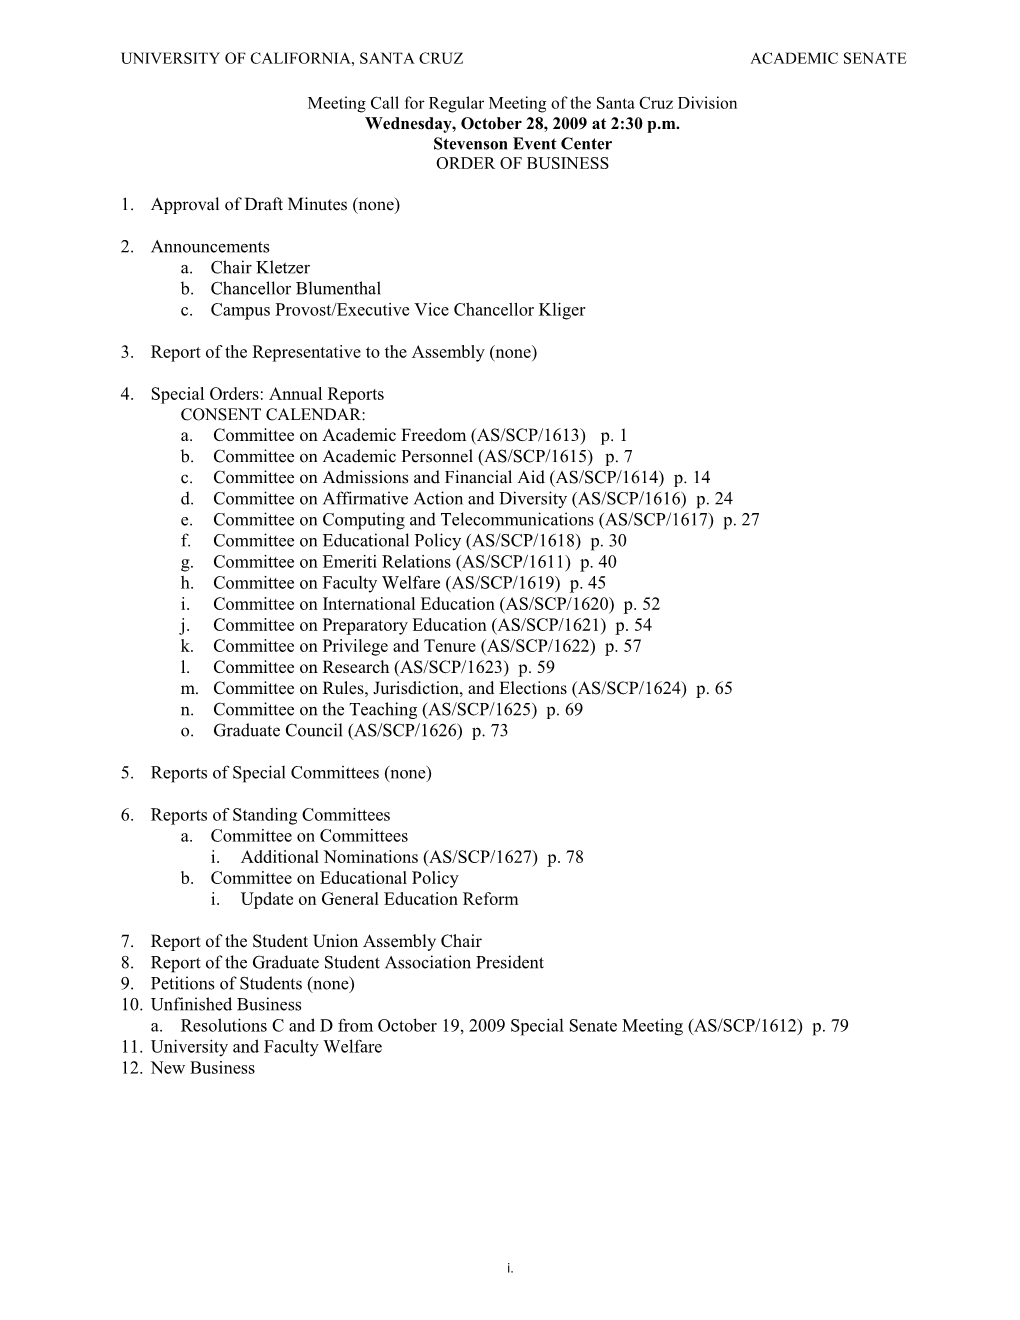 A Single PDF Version of the Agenda Call